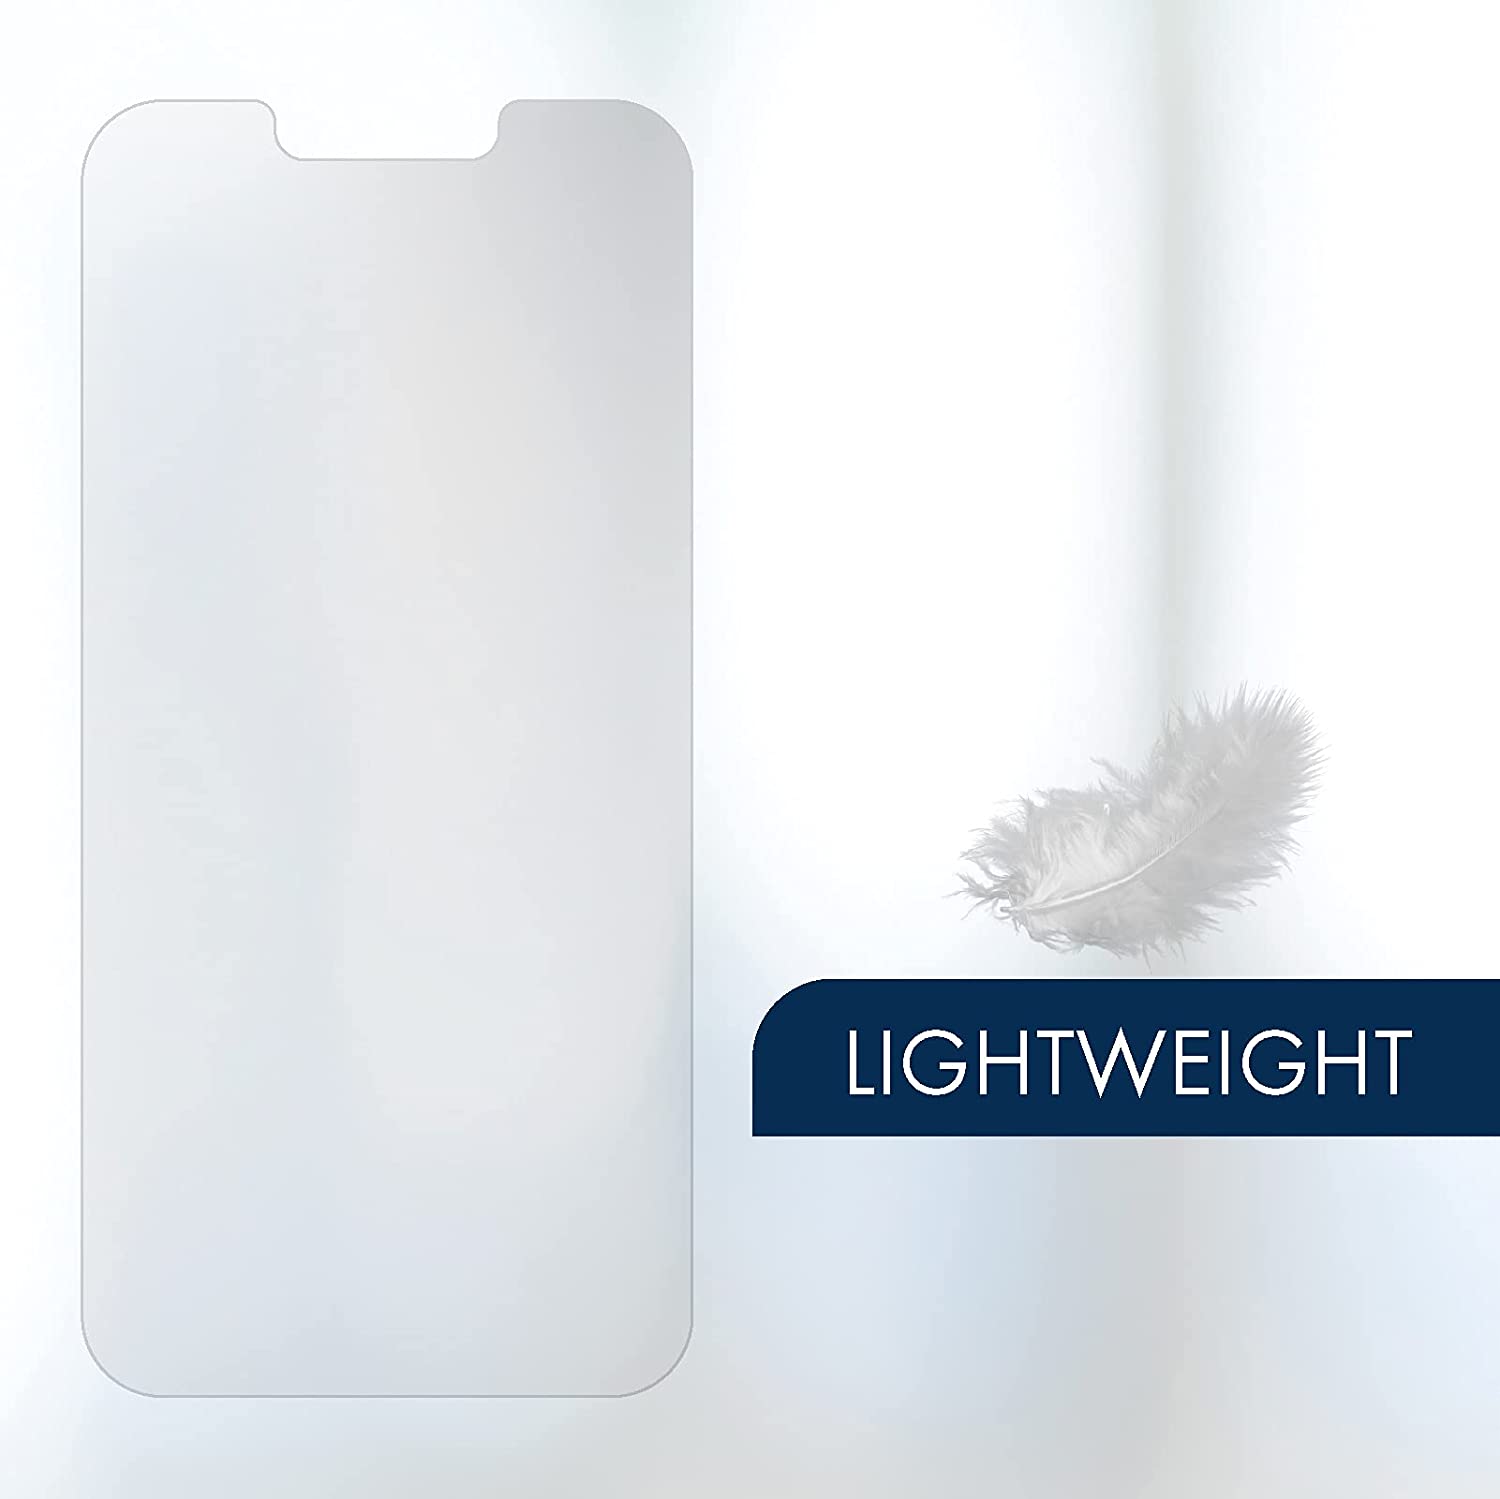 Nokia Lumia 820 Screen Protector + White Carbon Fiber Skin Protector